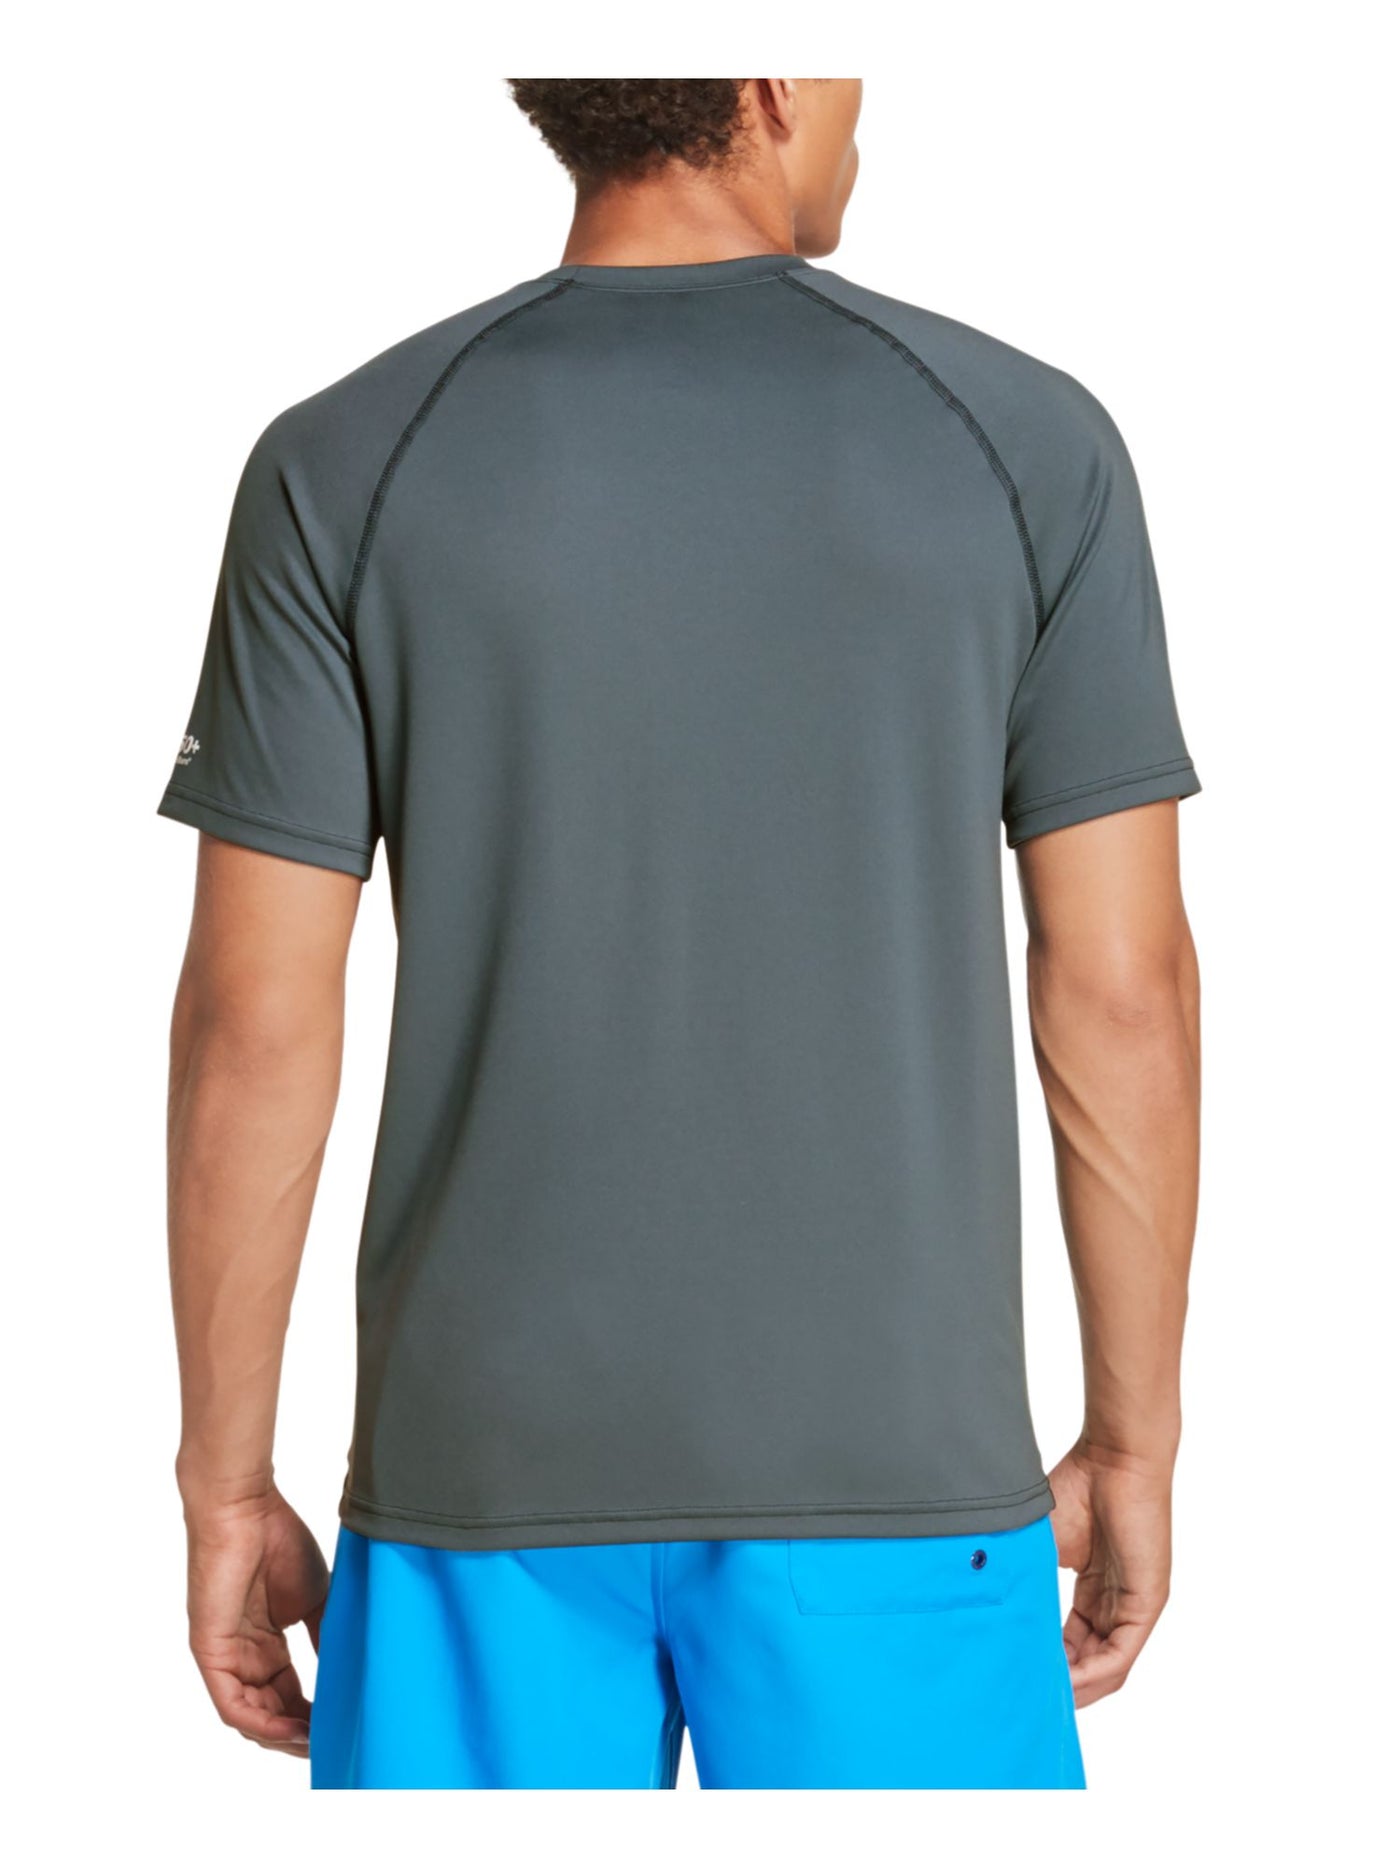 SPEEDO Mens Gray Logo Graphic Classic Fit Quick-Dry T-Shirt S